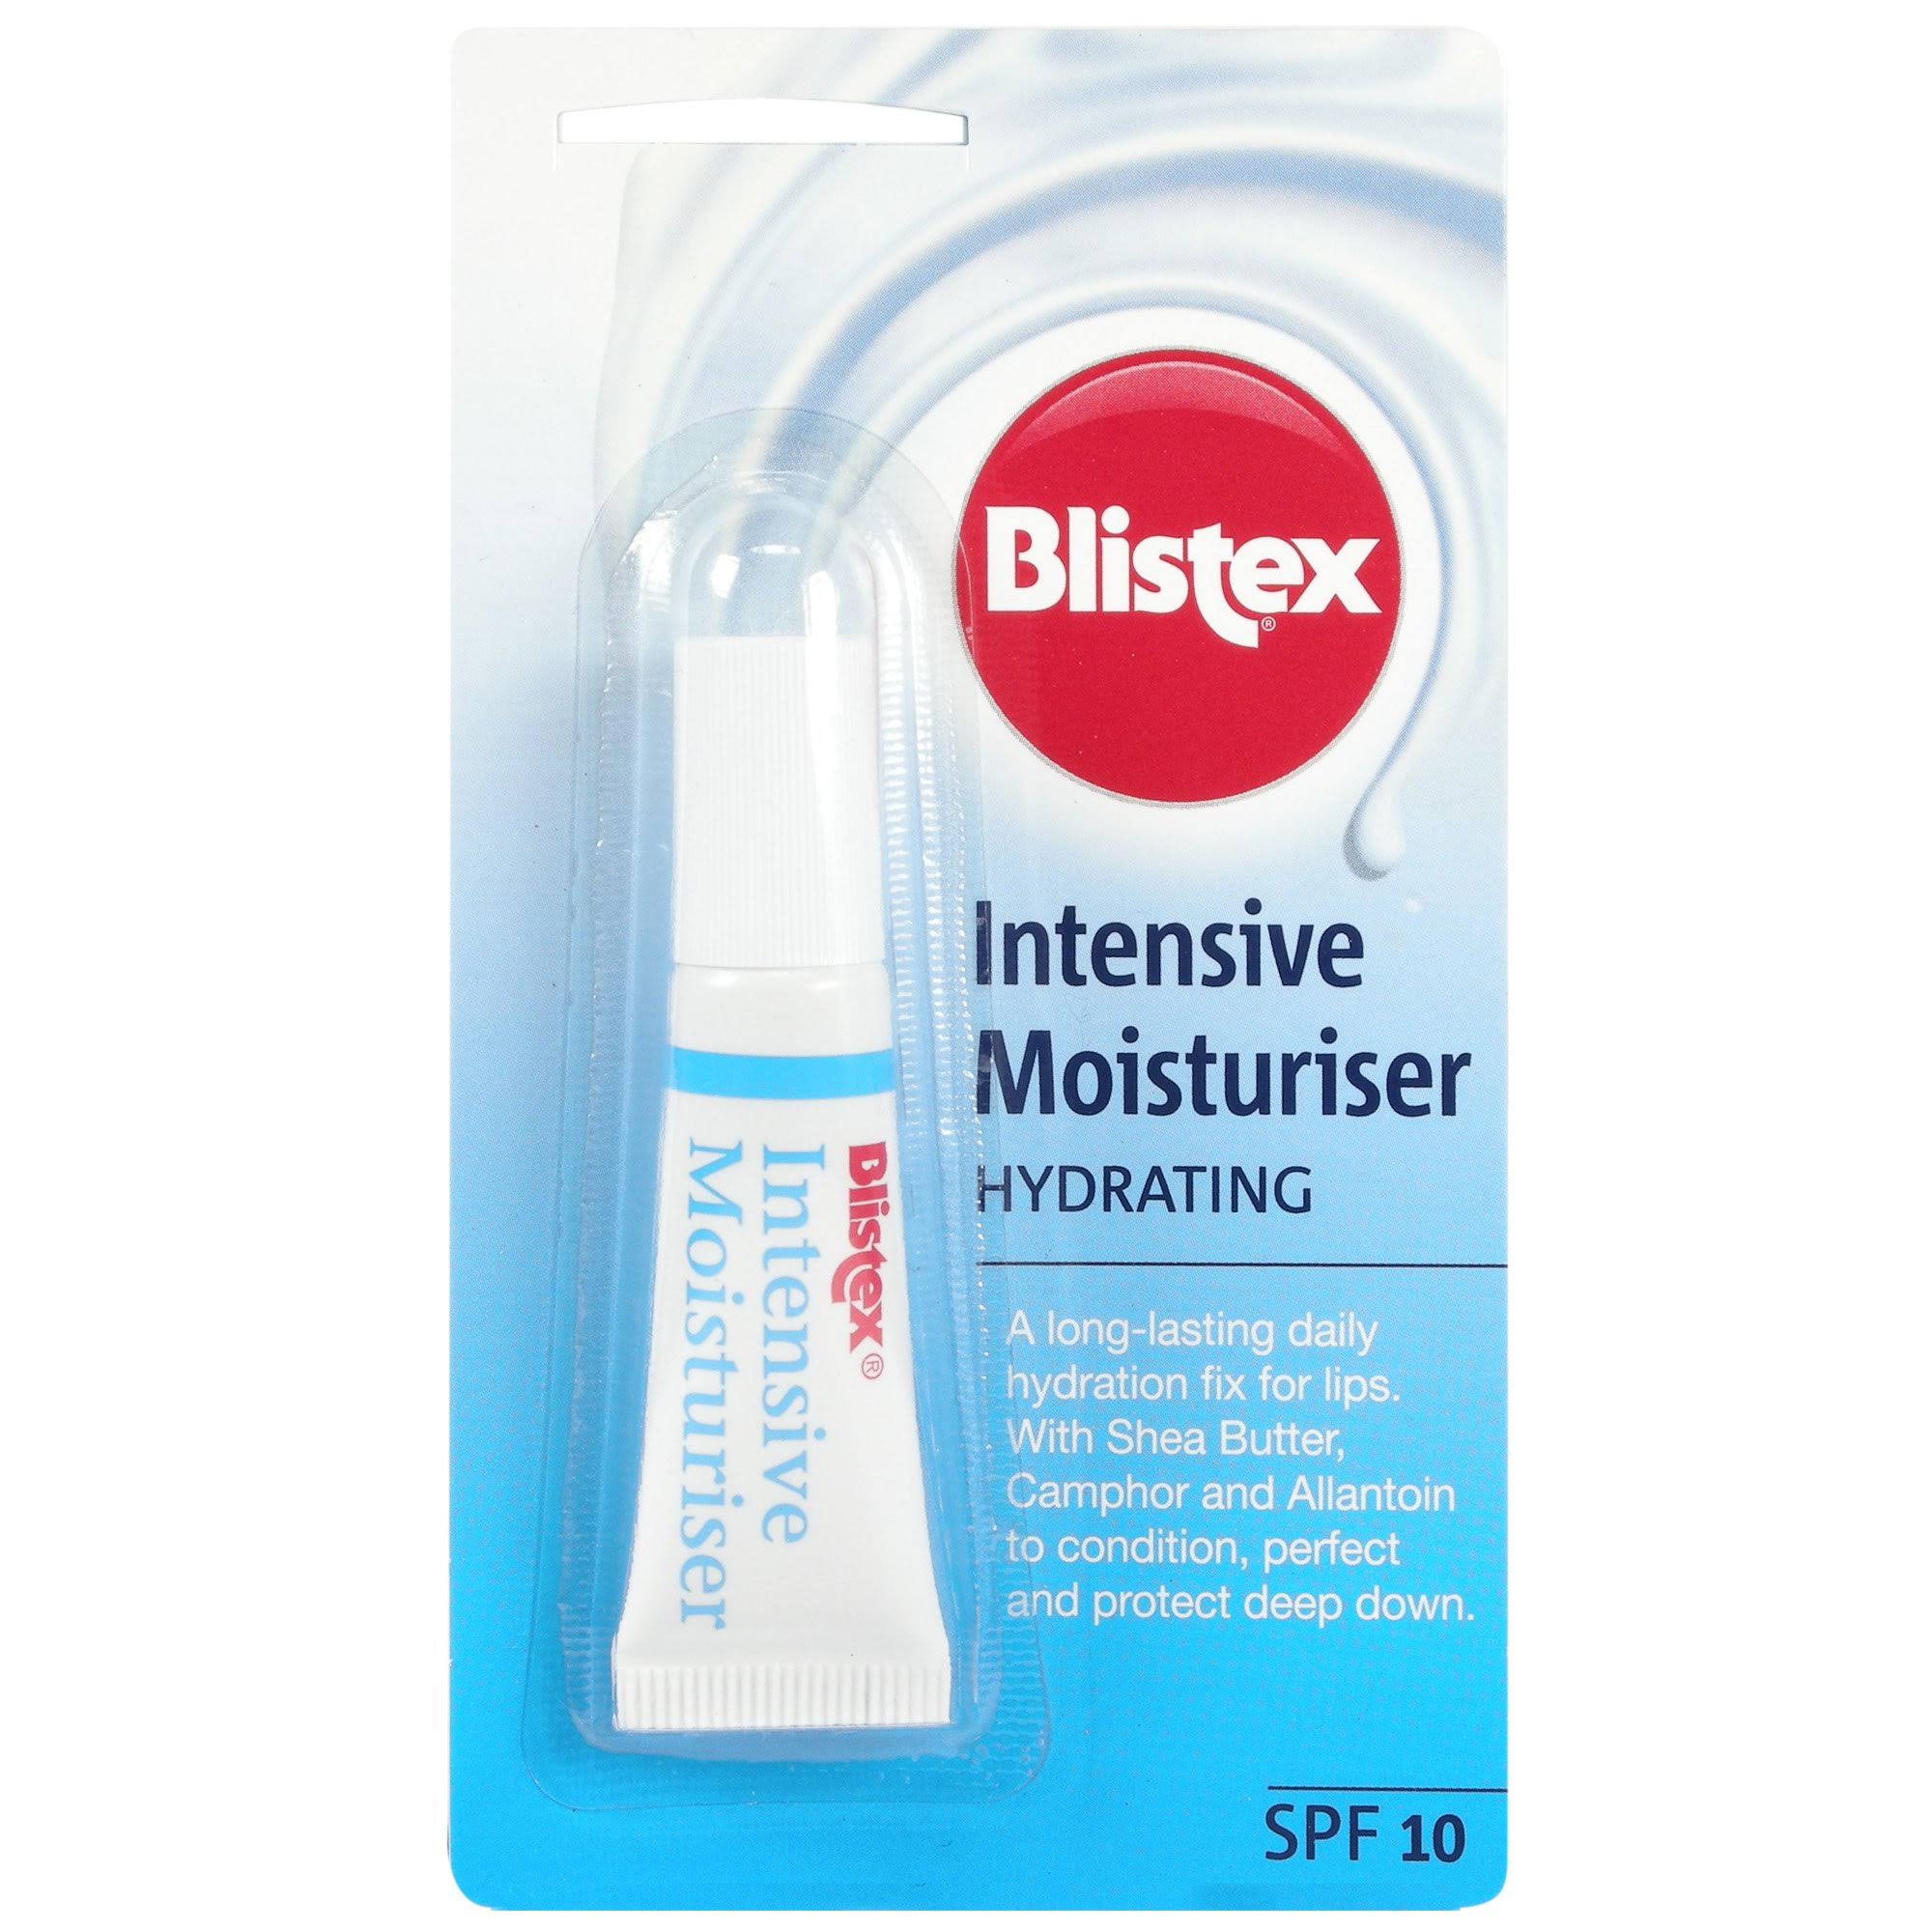 Blistex Intensive Hydrating Moisturiser - SPF 10, 5g